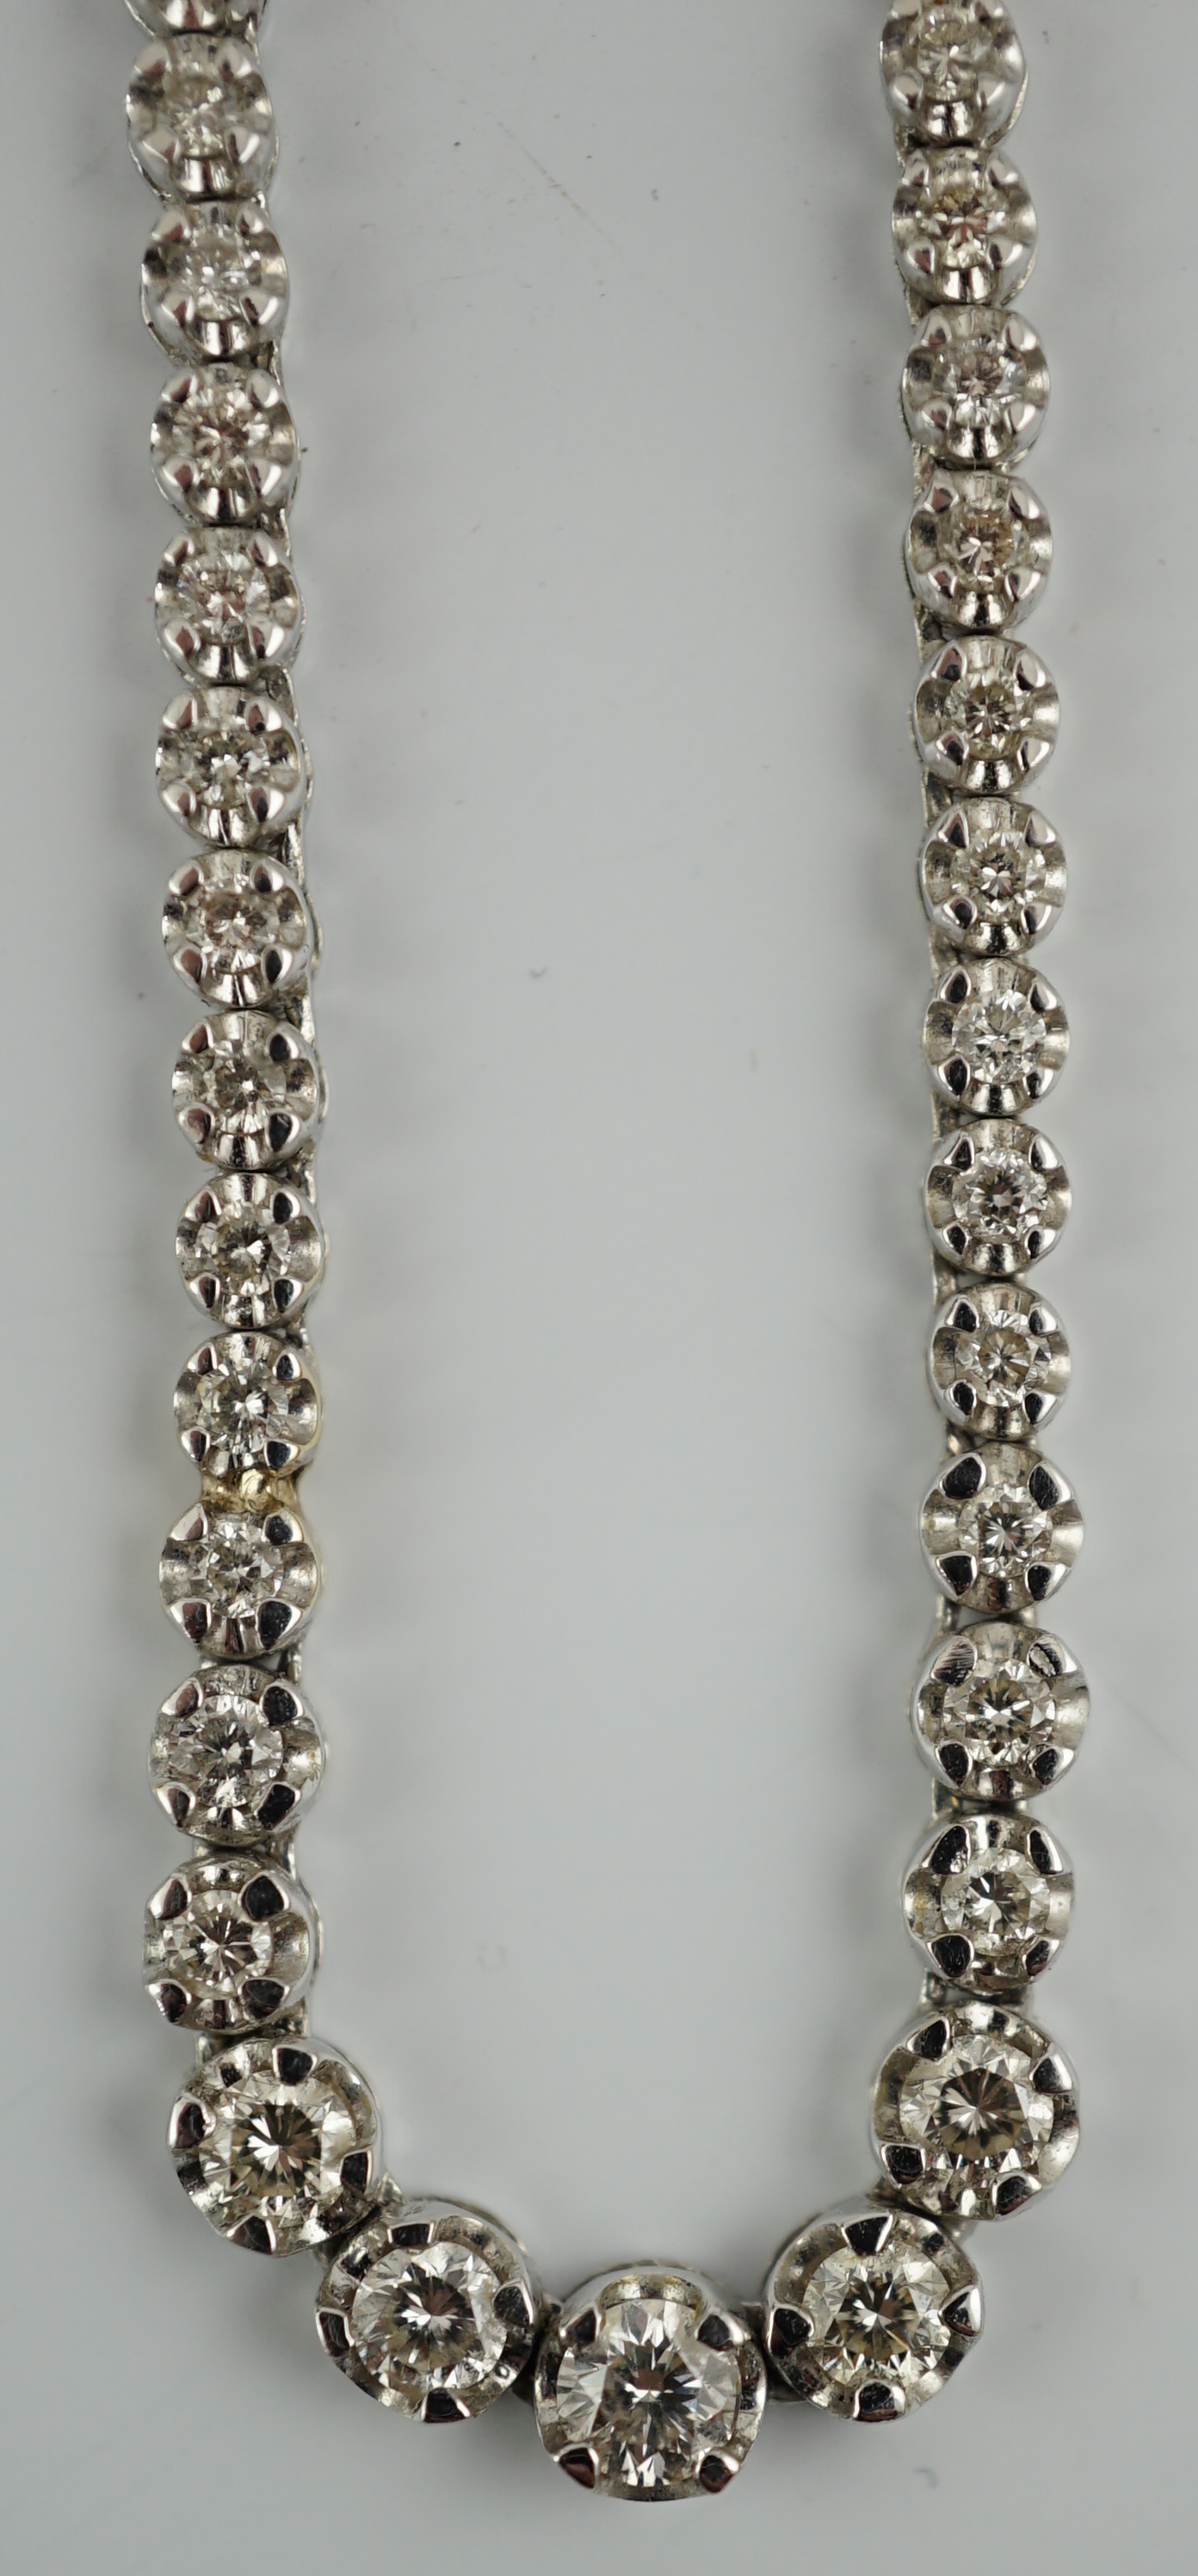 A modern 18k gold and illusion set diamond line necklace